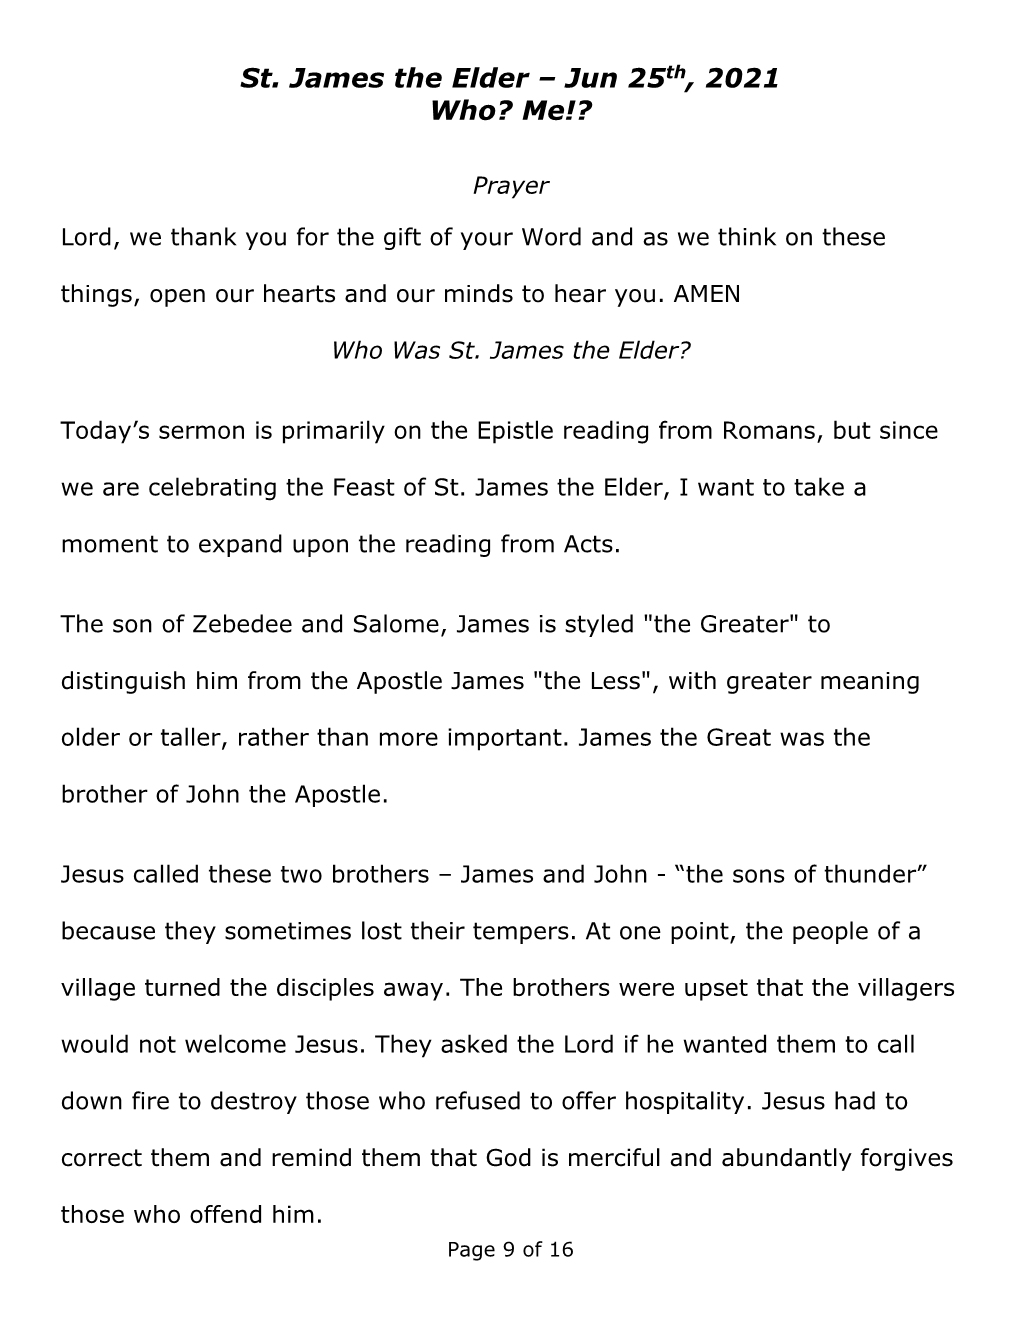 St. James the Elder – Jun 25Th, 2021 Who? Me!?